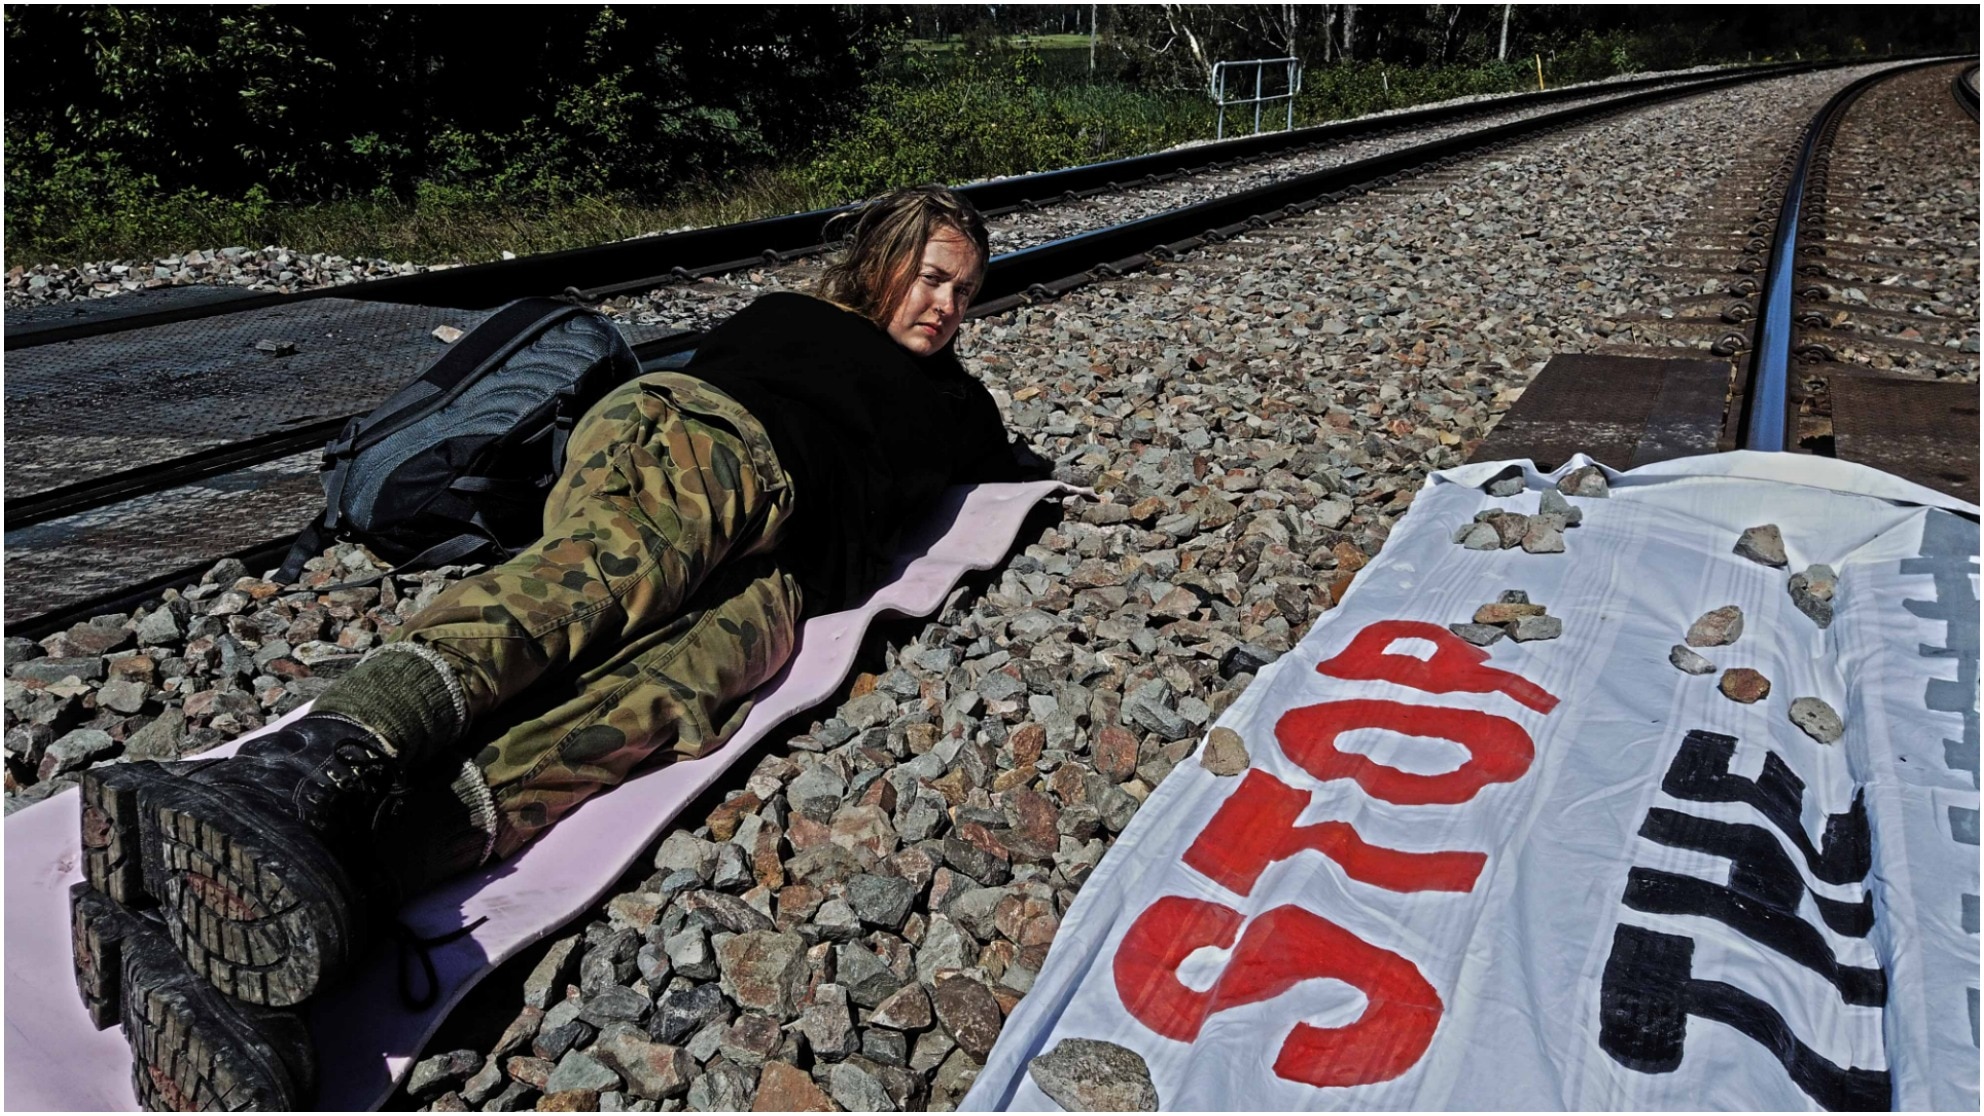 Young activists blocking train tracks.